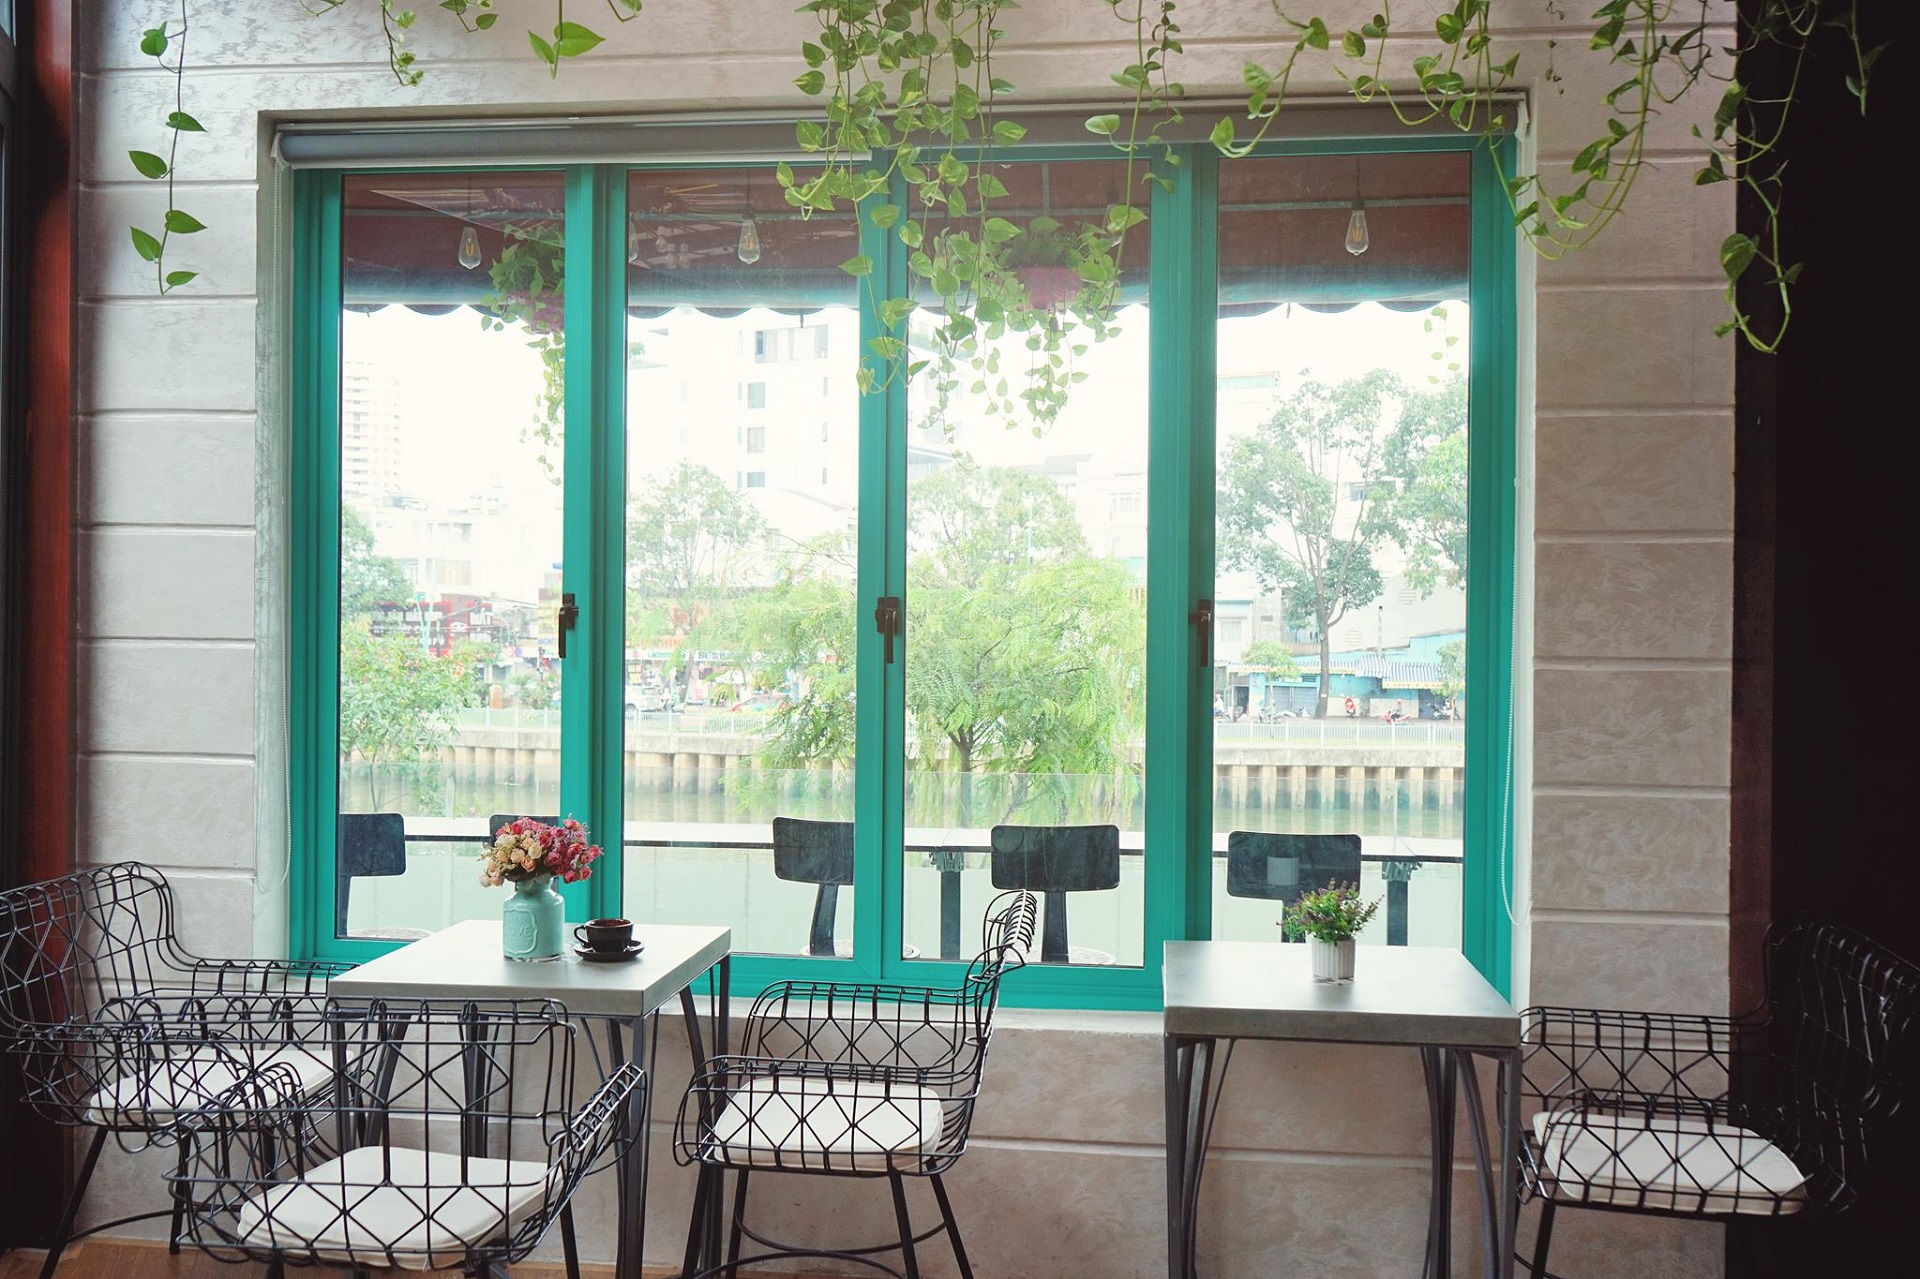 https://www.nguyenphongcnc.com/assets/images/gallery/ban-ghe-sat-uon-my-thuat-cho-quan-cafe.jpeg